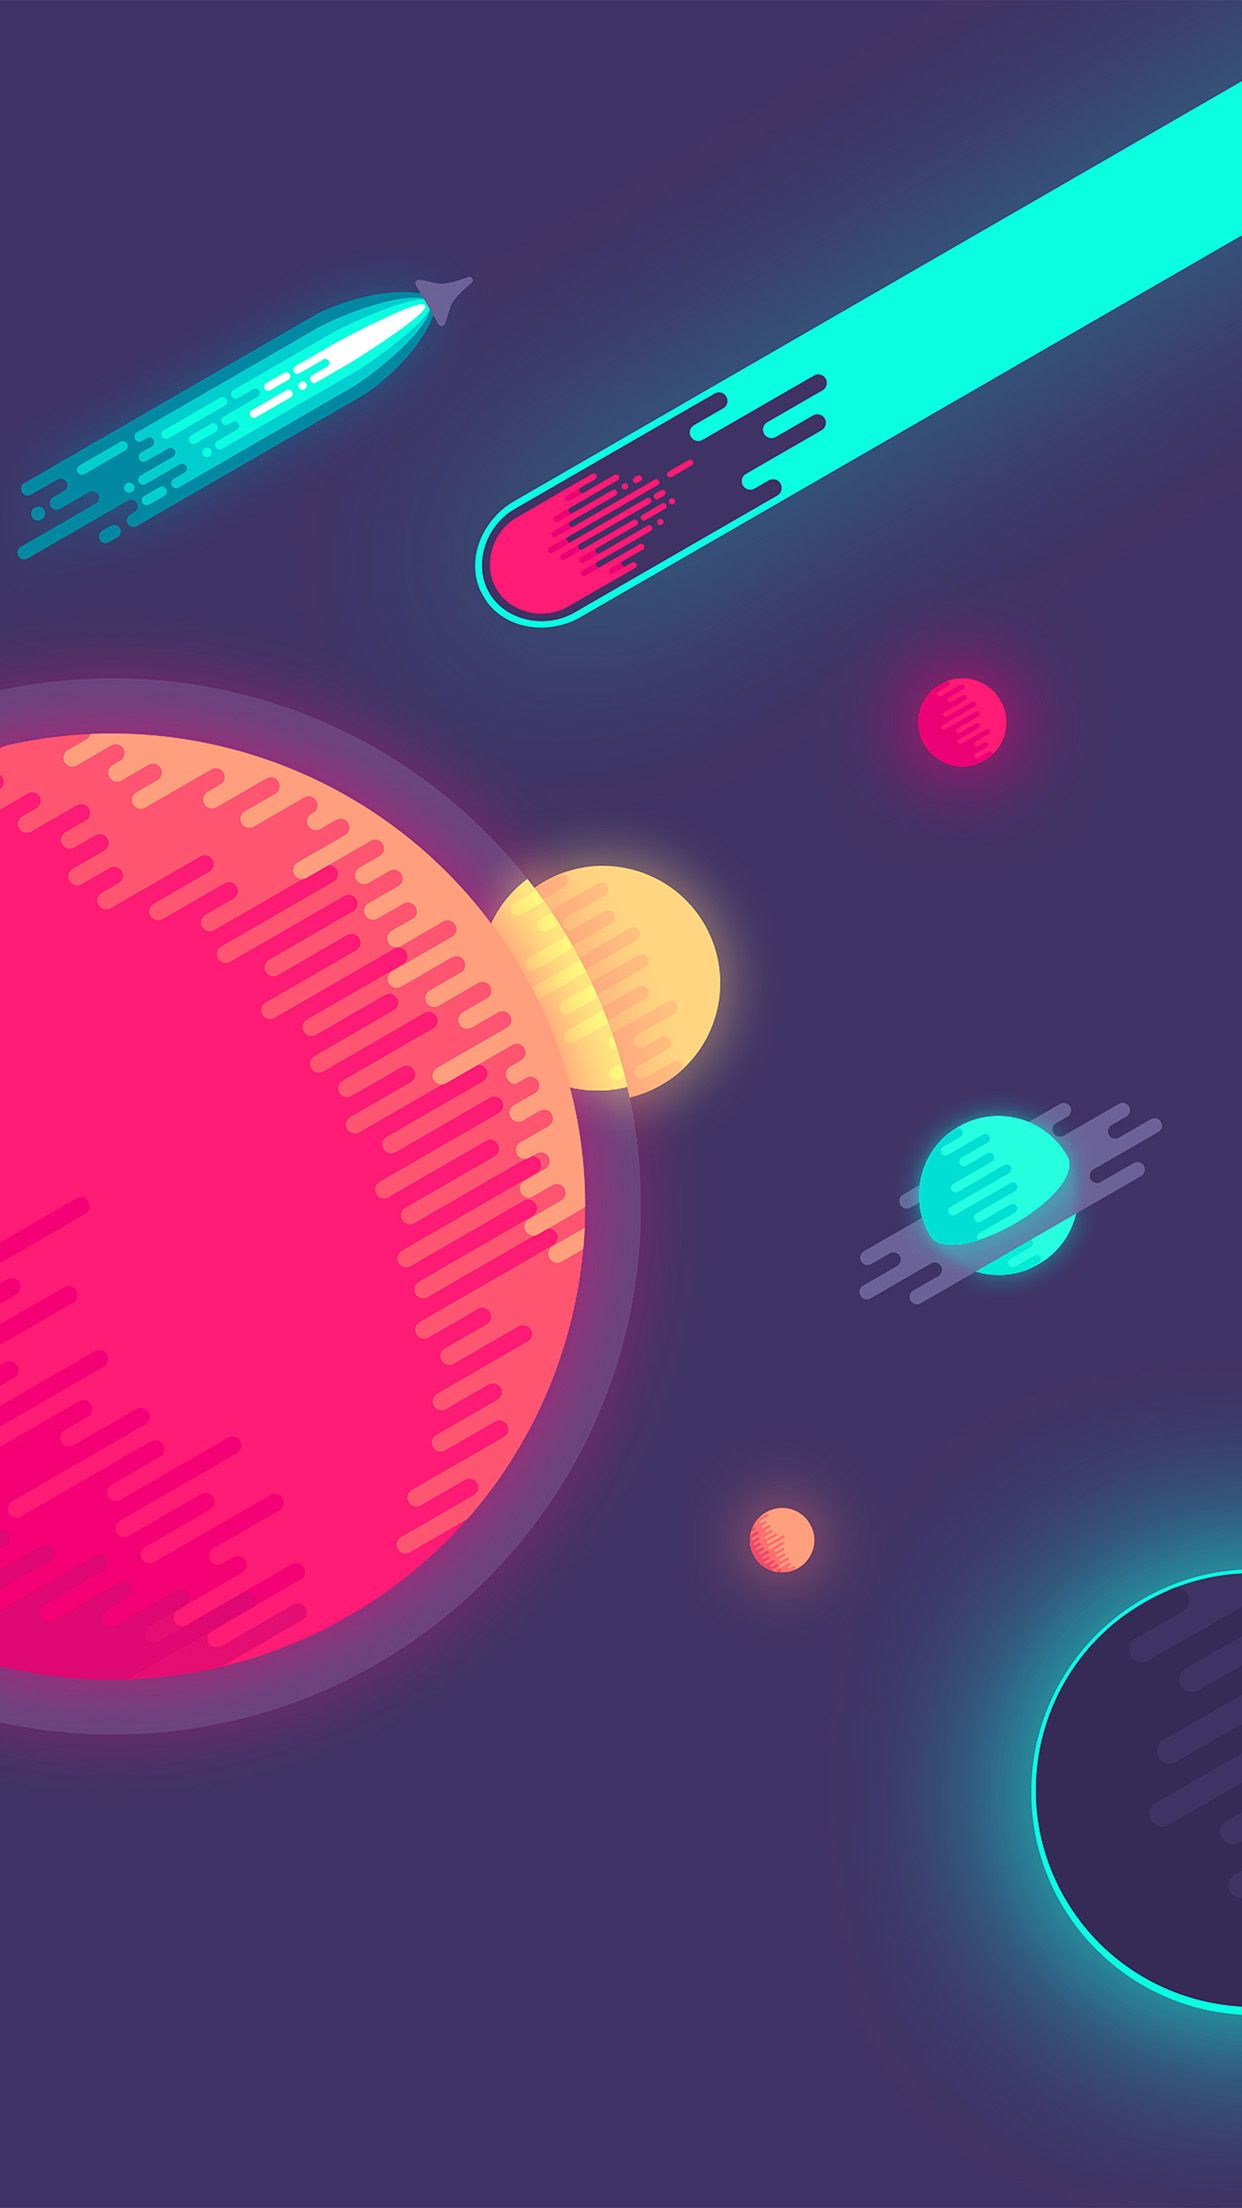 Space Minimal Art Illustration Android wallpaper HD